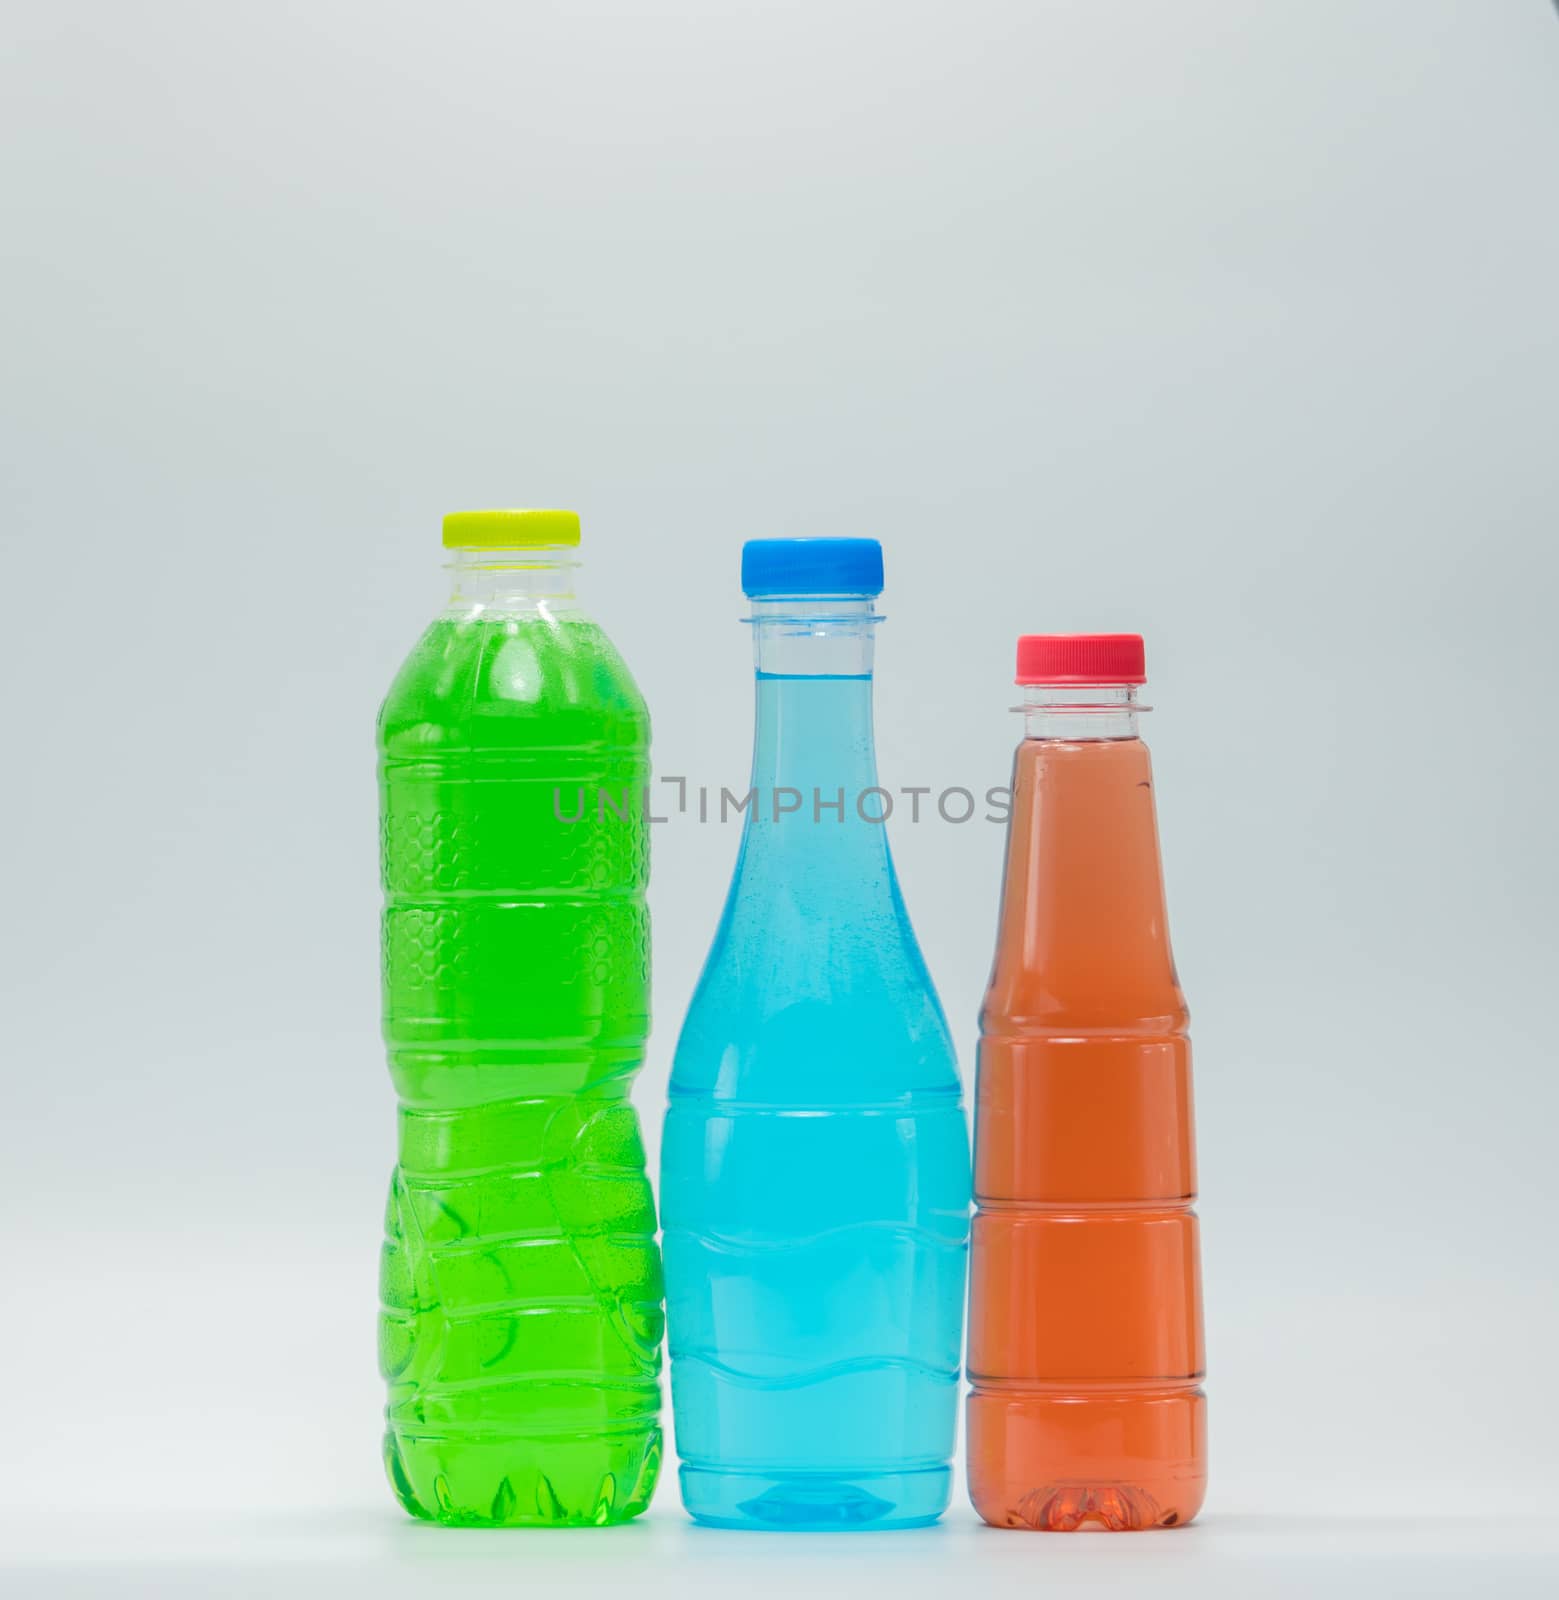 Three modern design bottles of soft drink on white background